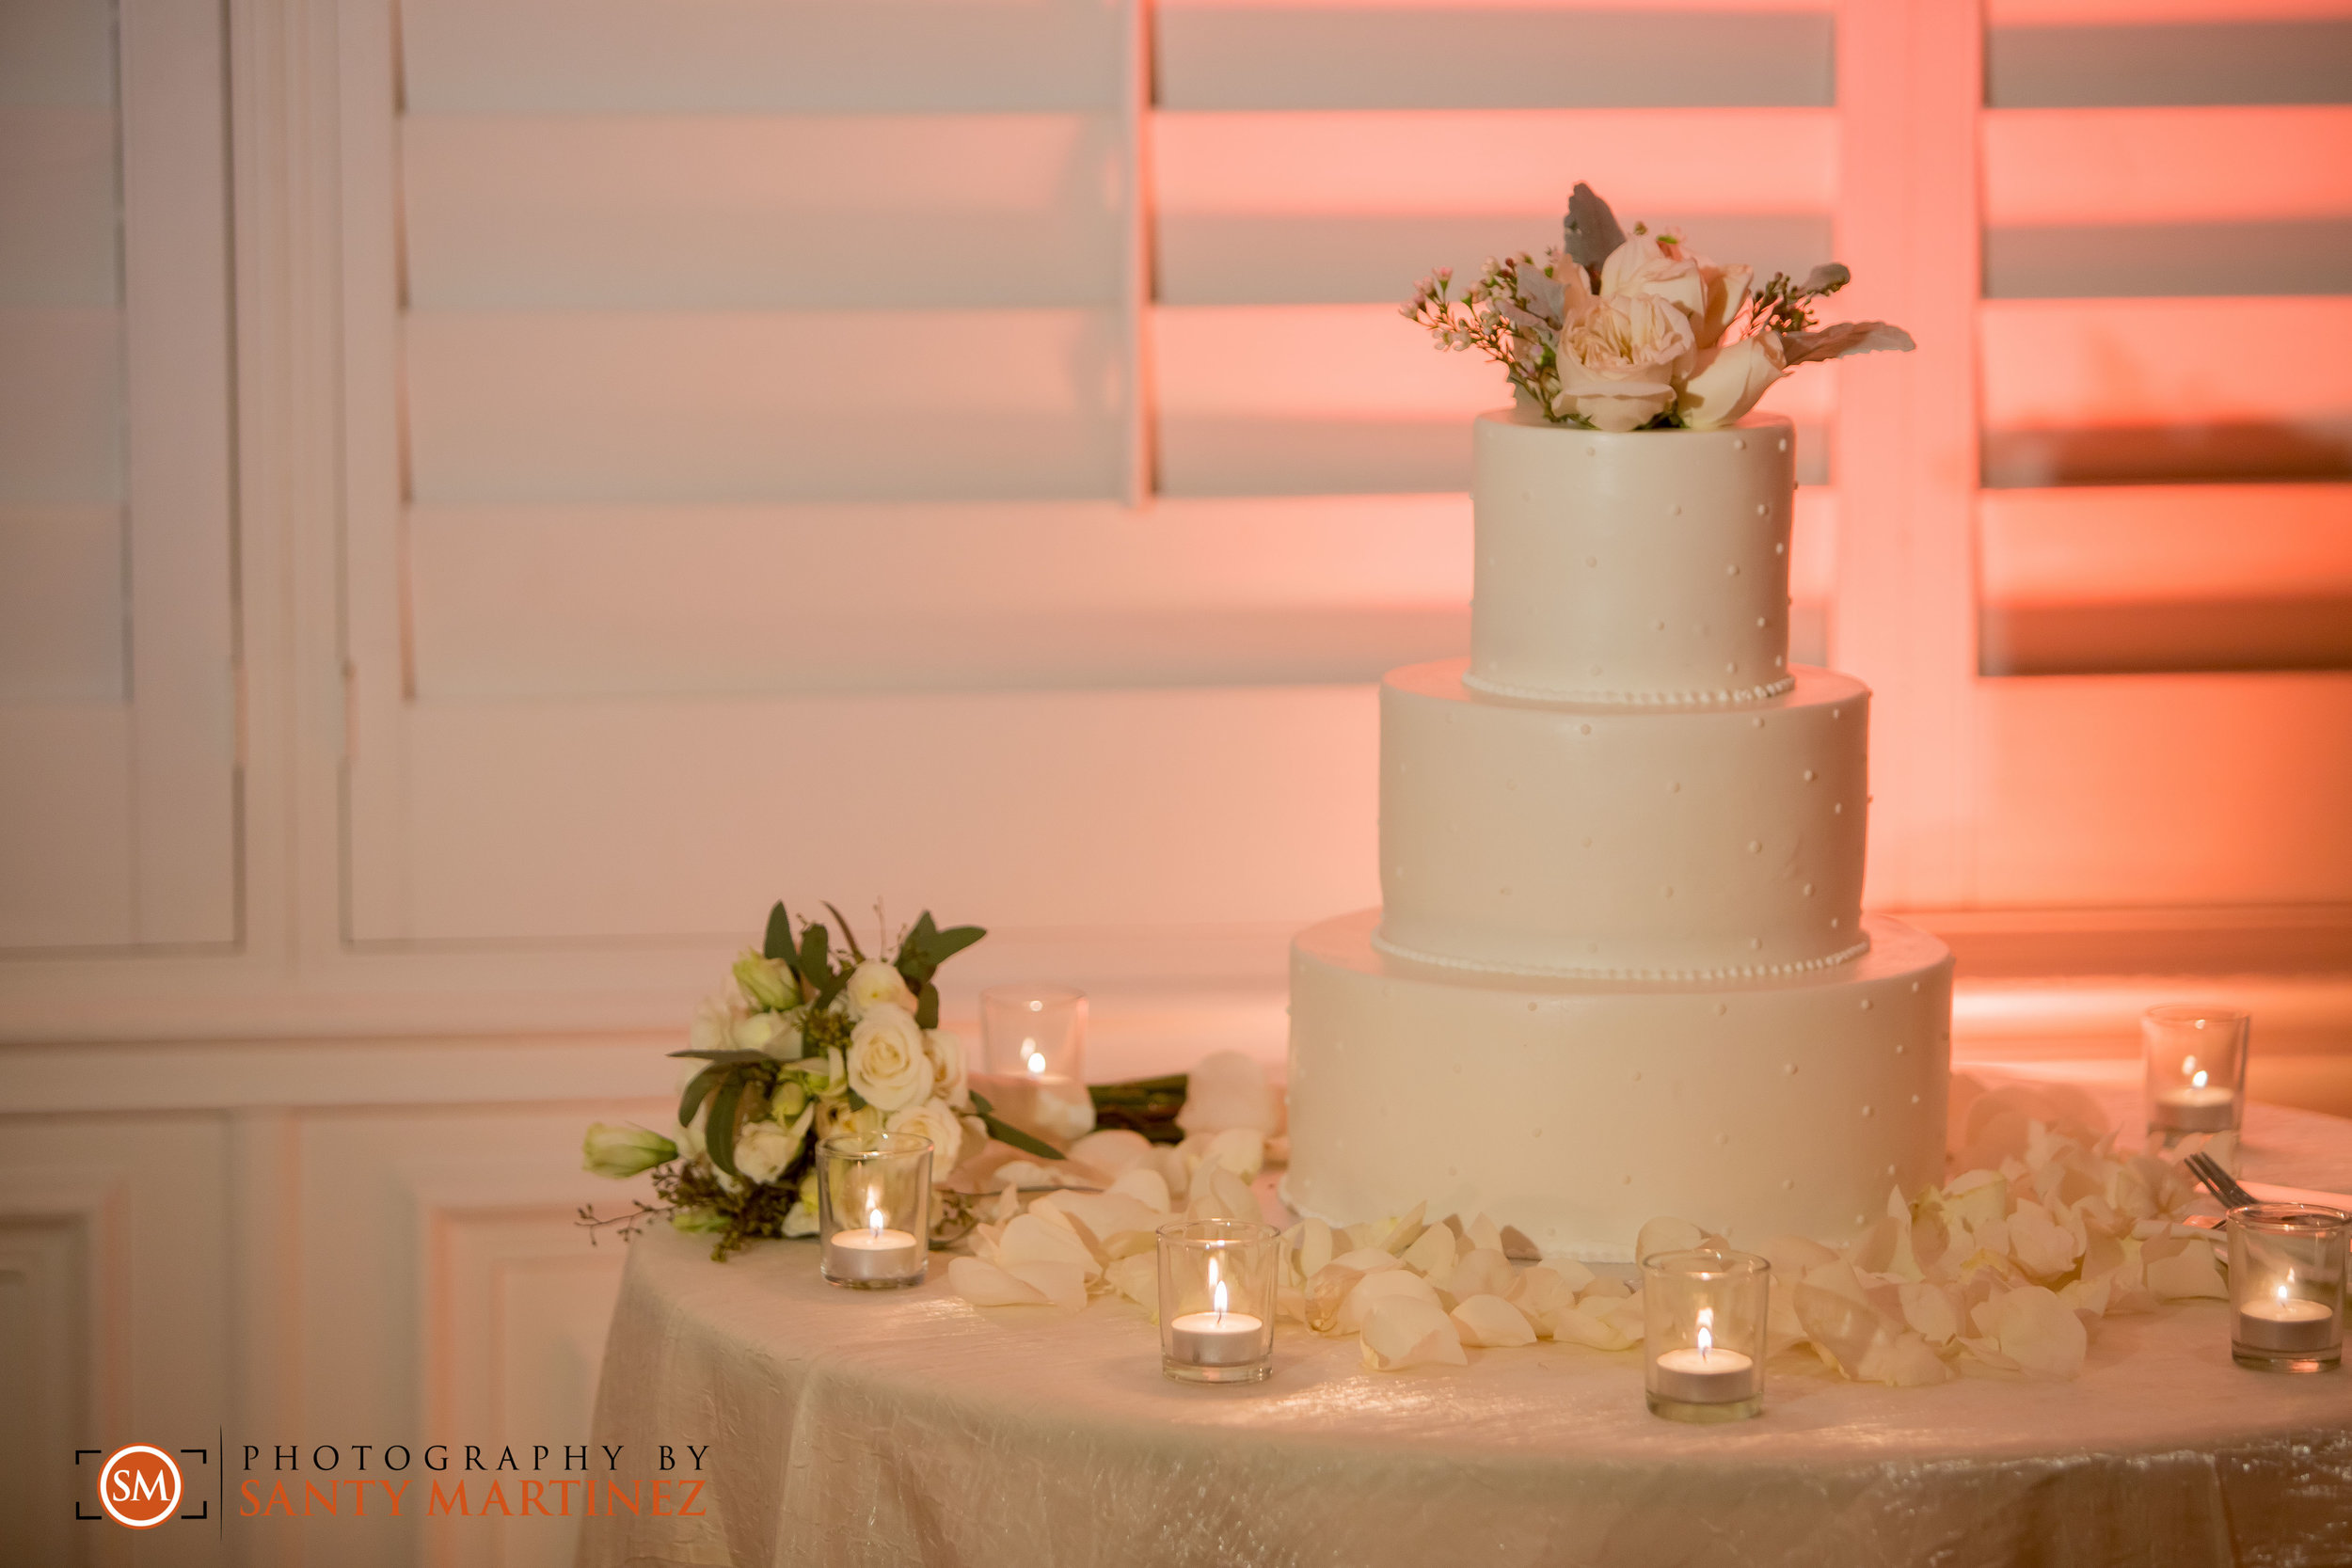 Miami Wedding Photographer - Santy Martinez -29.jpg